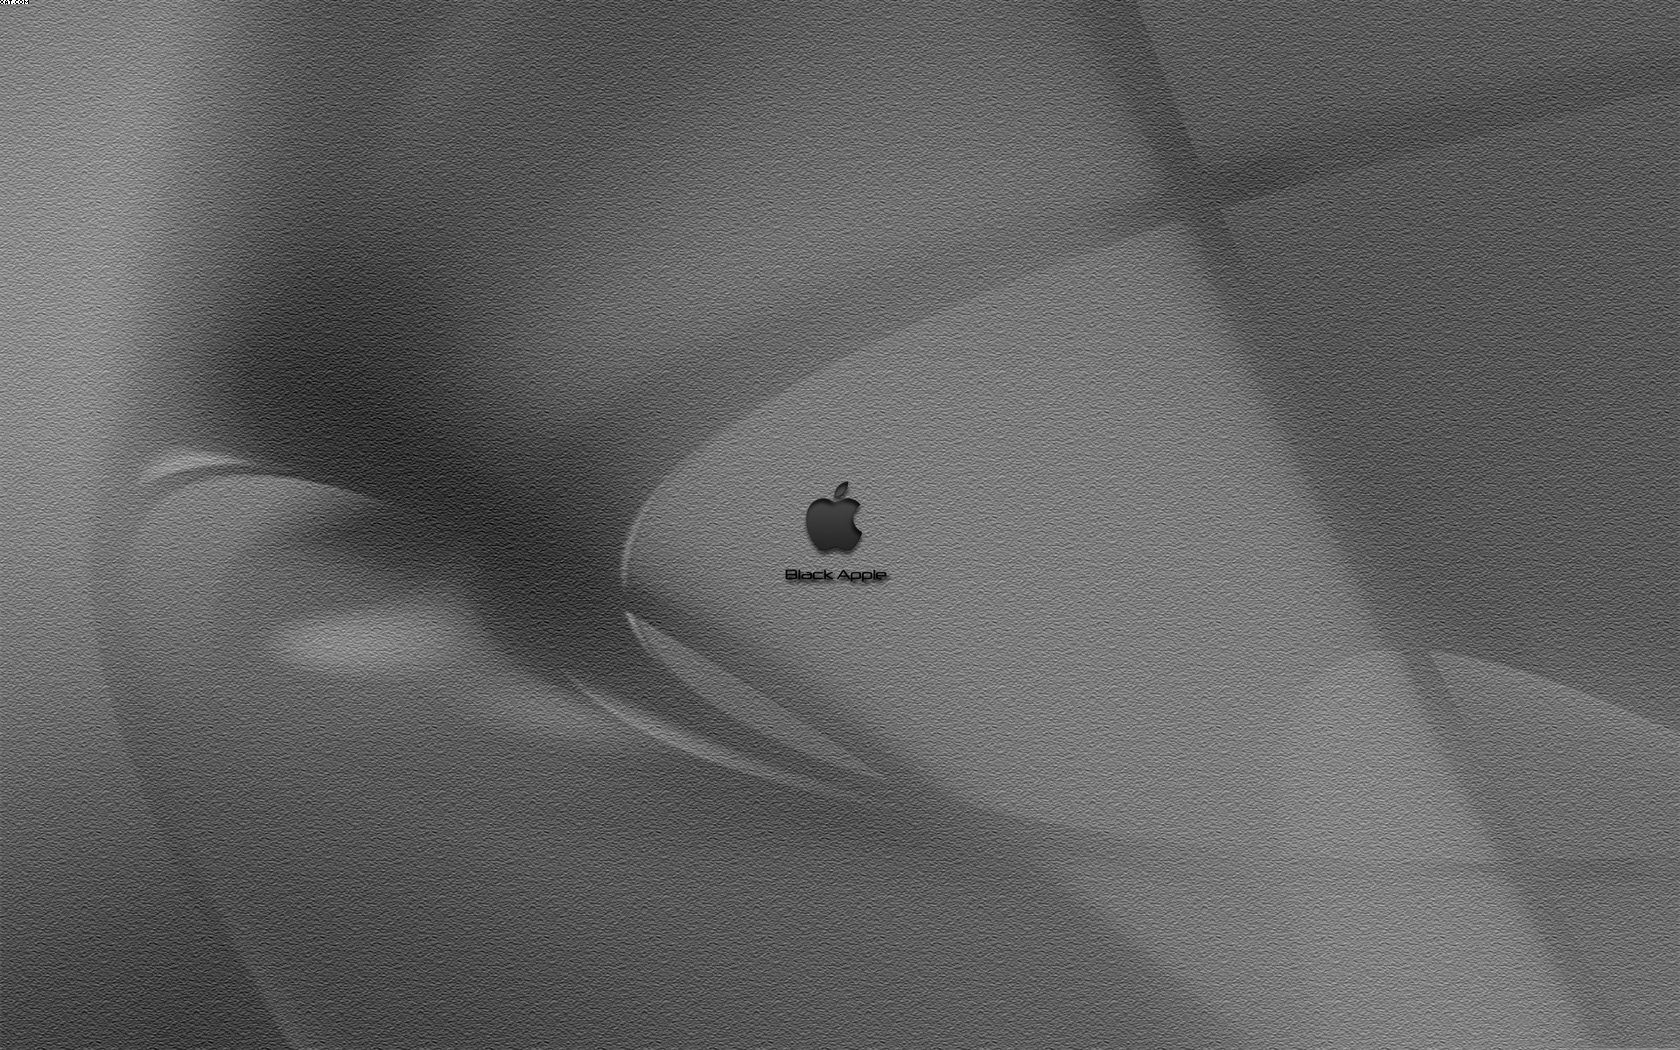 Wallpapers black apple black logo on the desktop